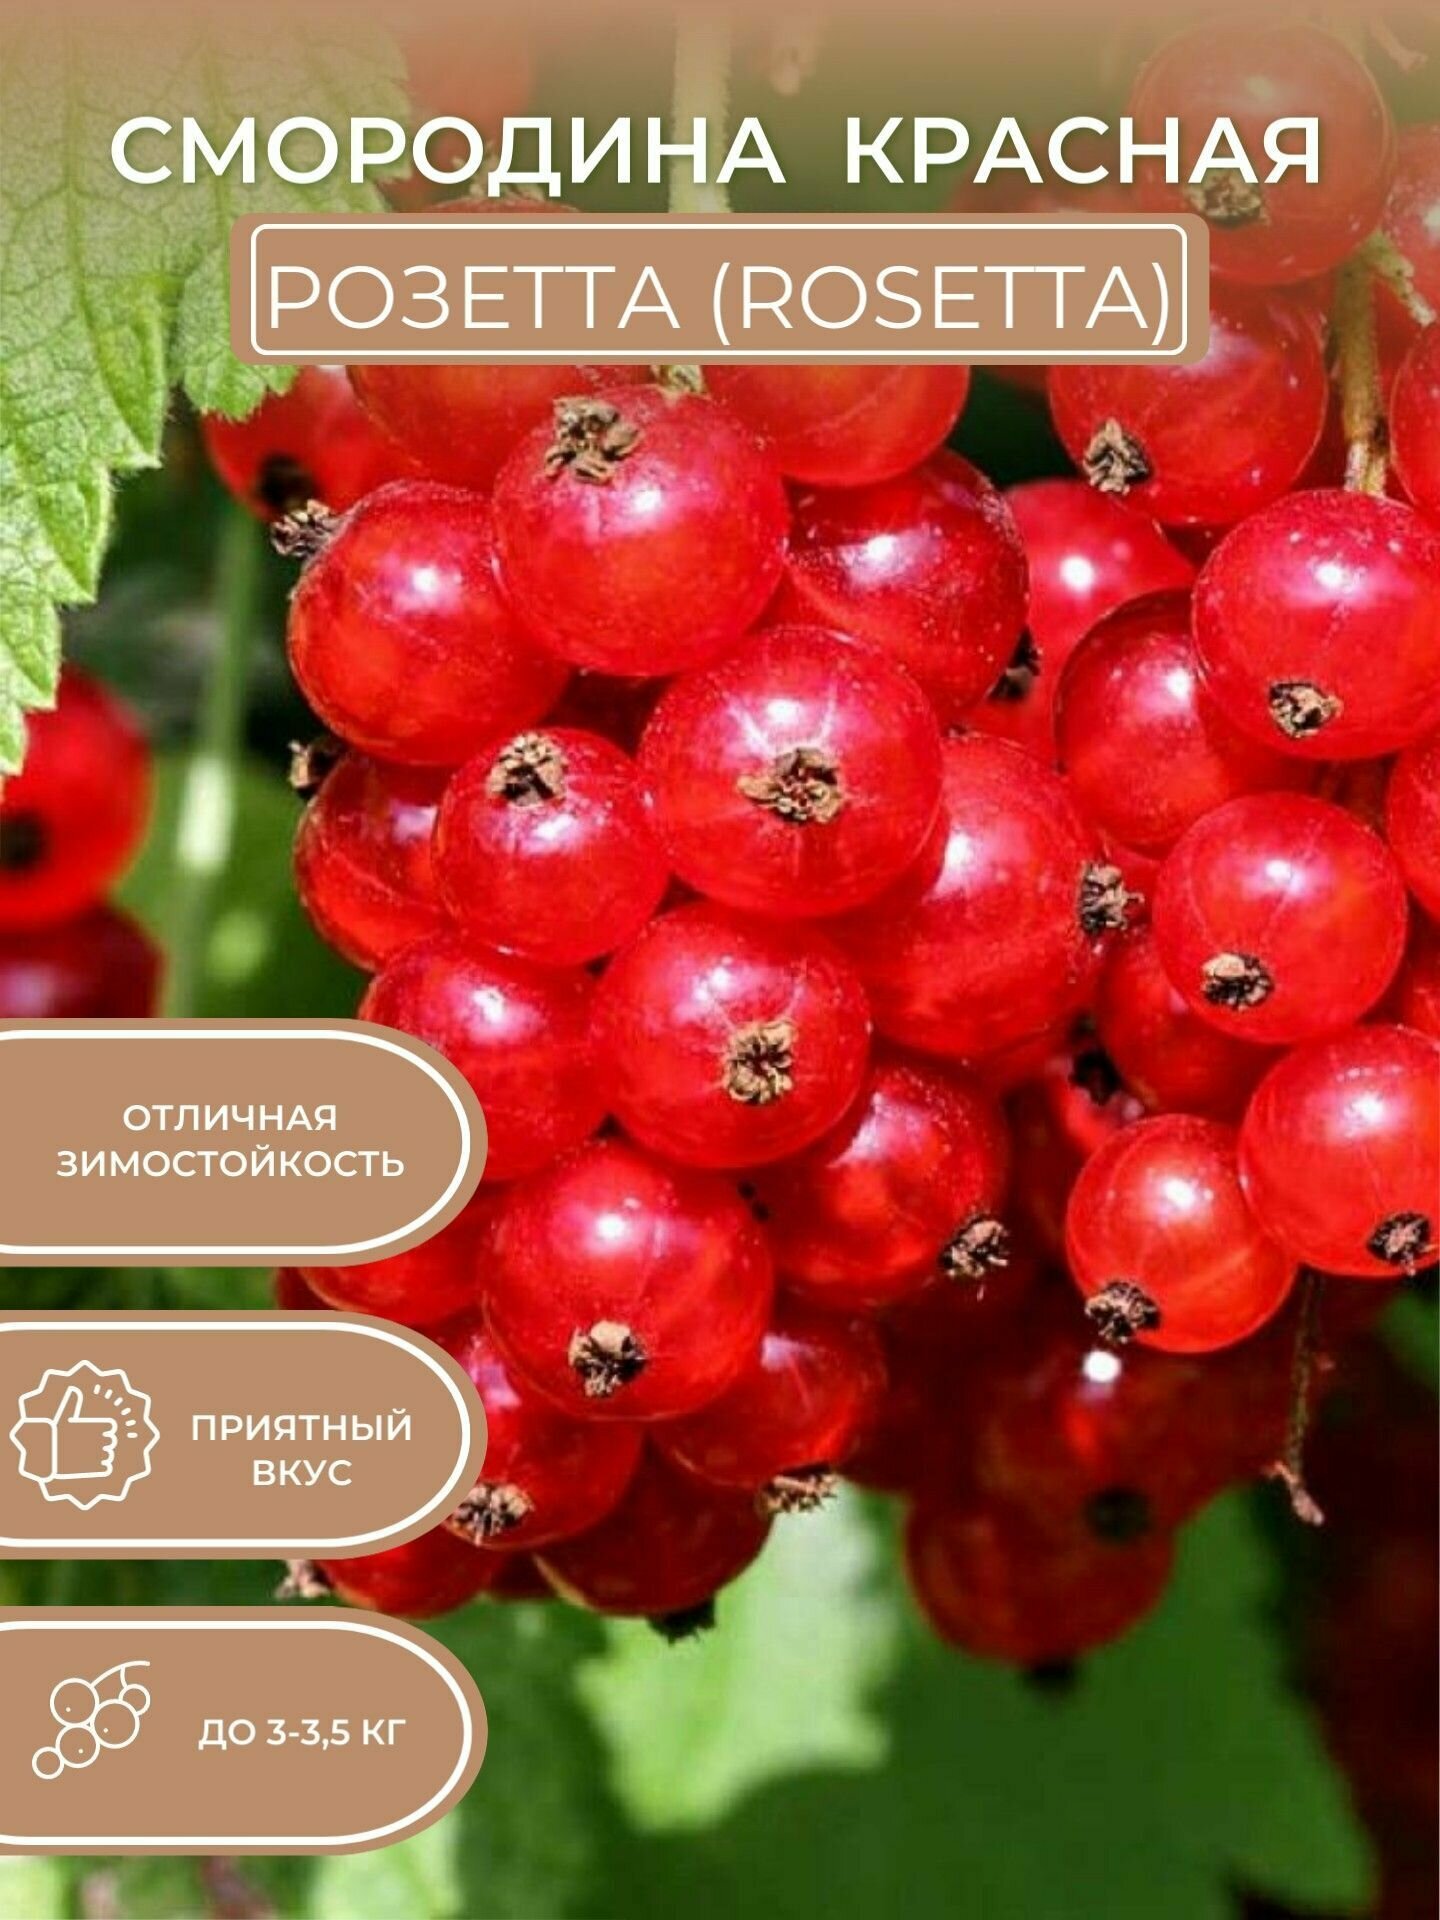 Саженцы смородины красной Розетта (Rosetta)